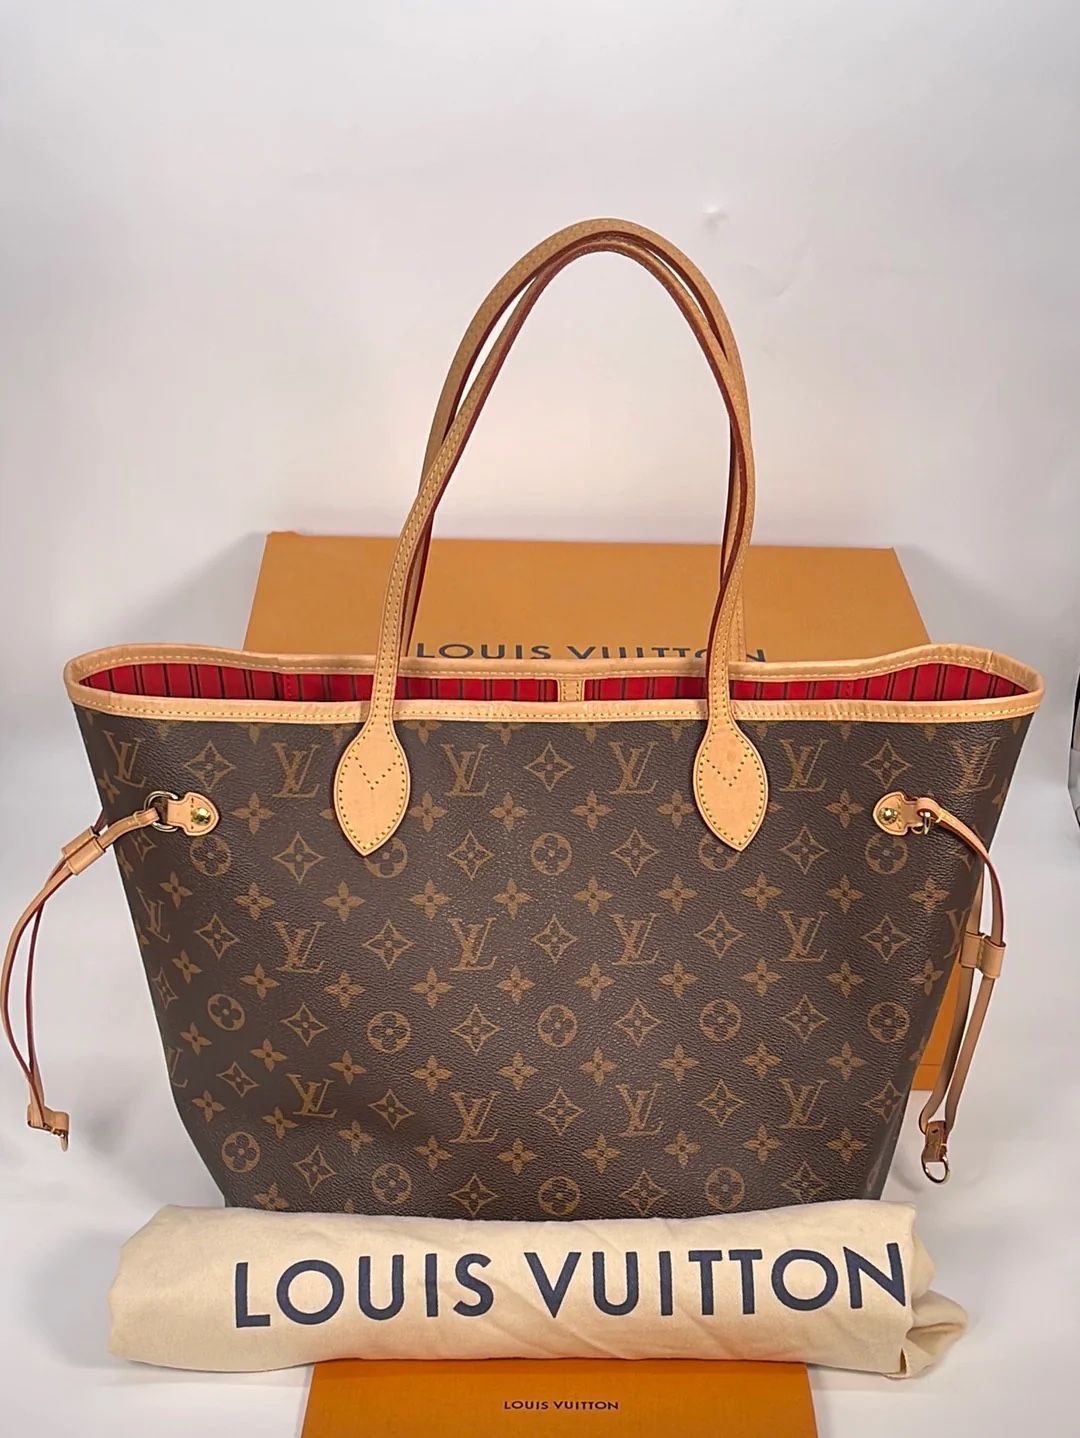 Brand new Louis Vuitton  purse